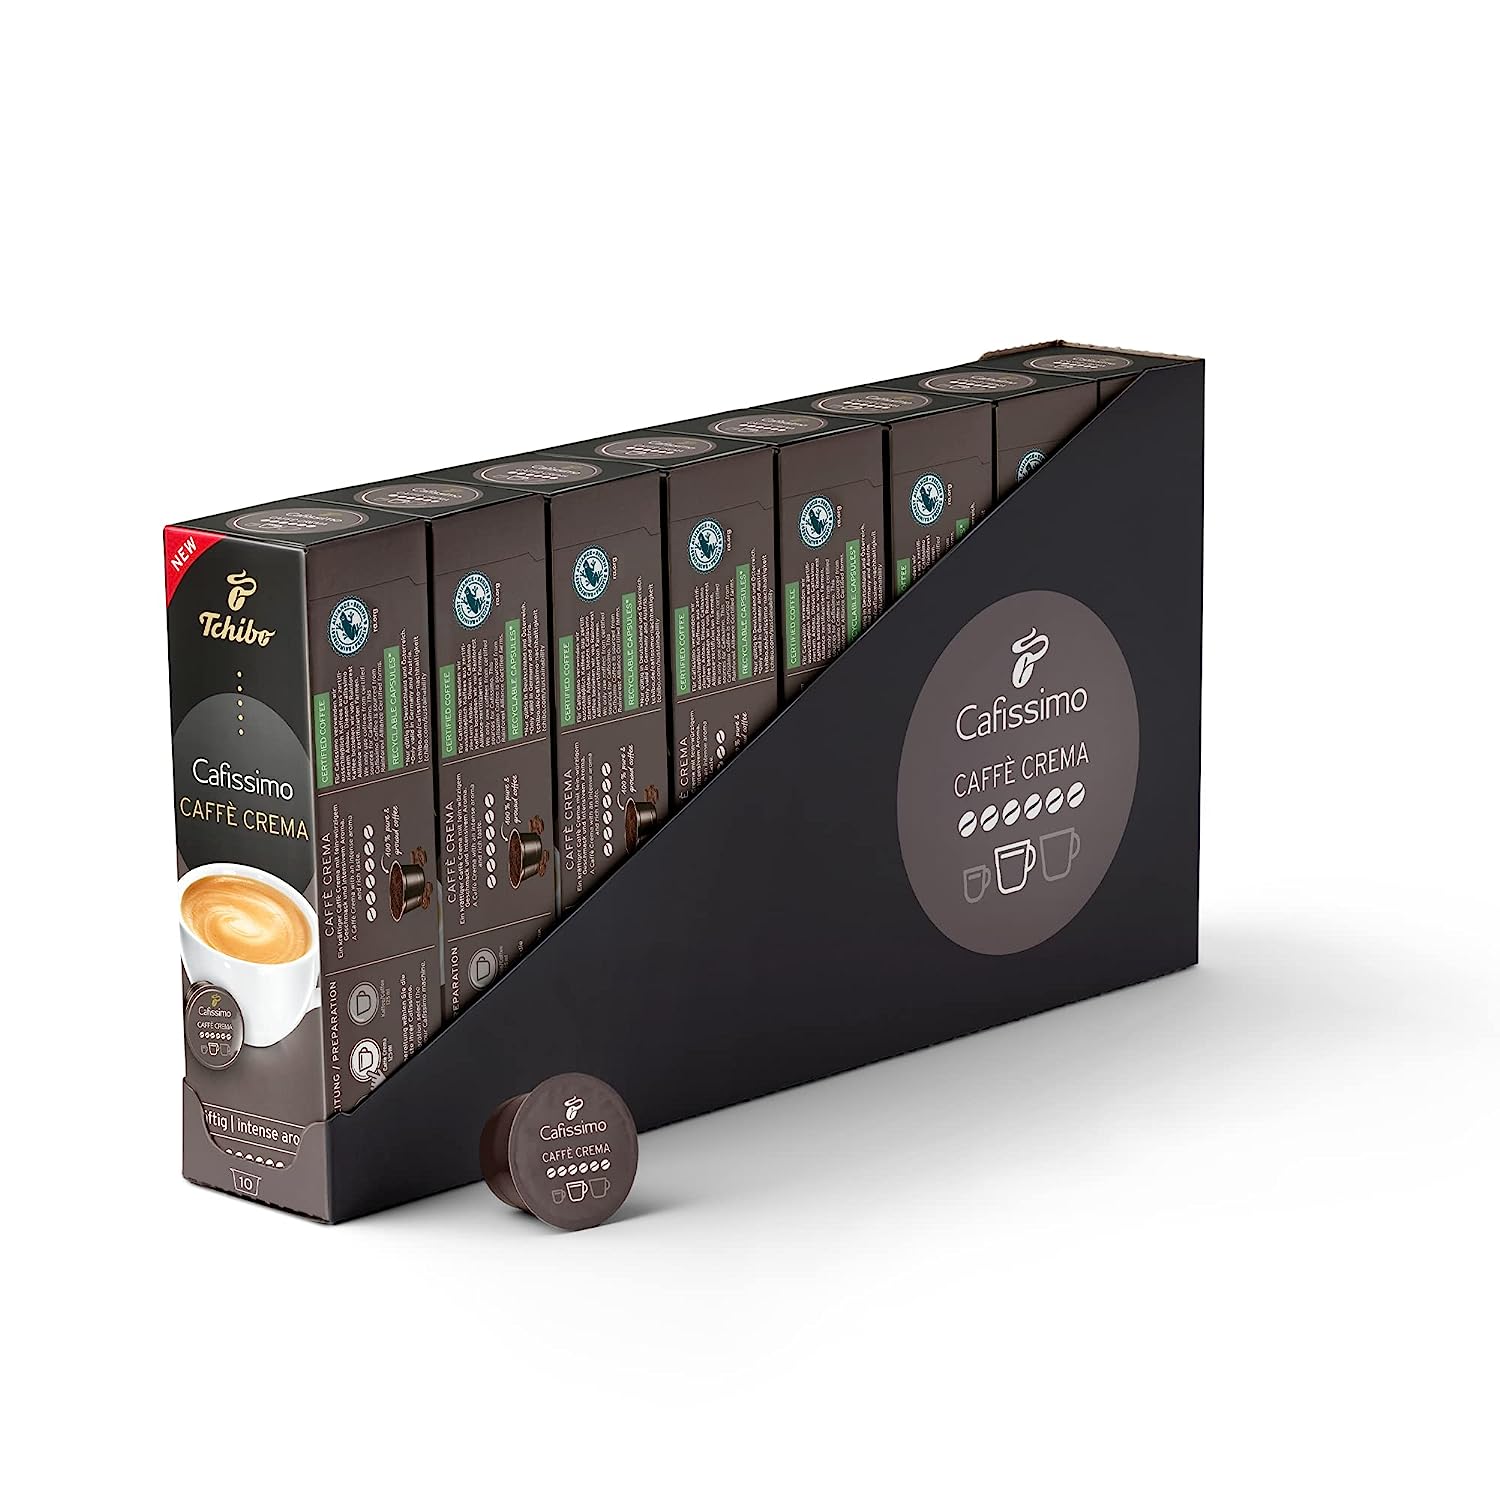 Tchibo Cafissimo storage box caffè crema vigorous coffee capsules, 80 pieces - 8x 10 capsules (coffee, intensive with strong roasting aromas), sustainable & fair traded